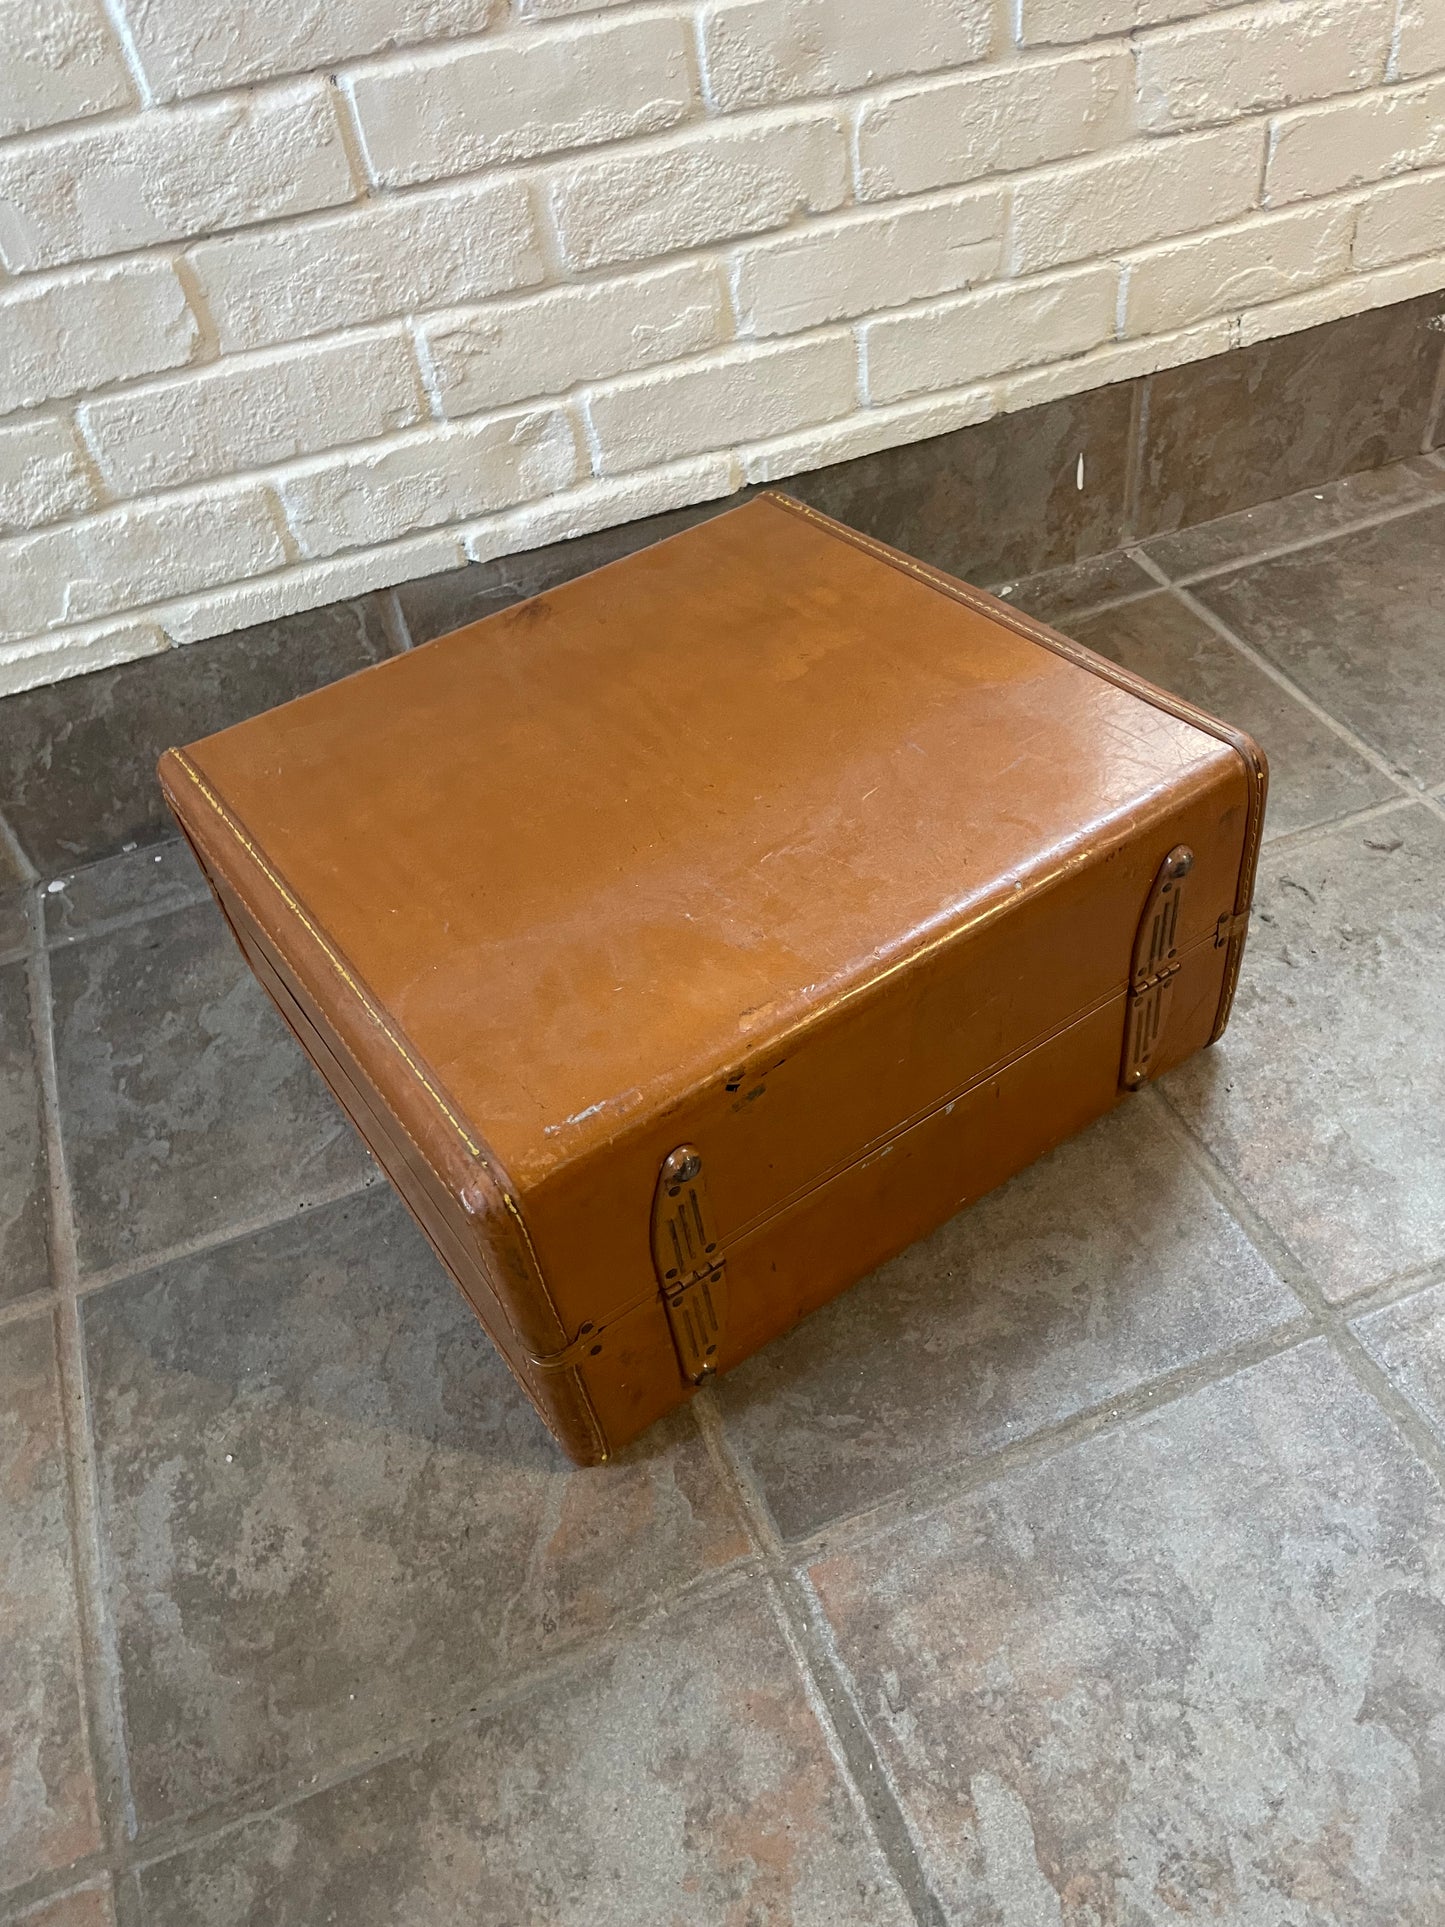 Vintage Samsonite Suitcase Hand Luggage - Pick Up Only